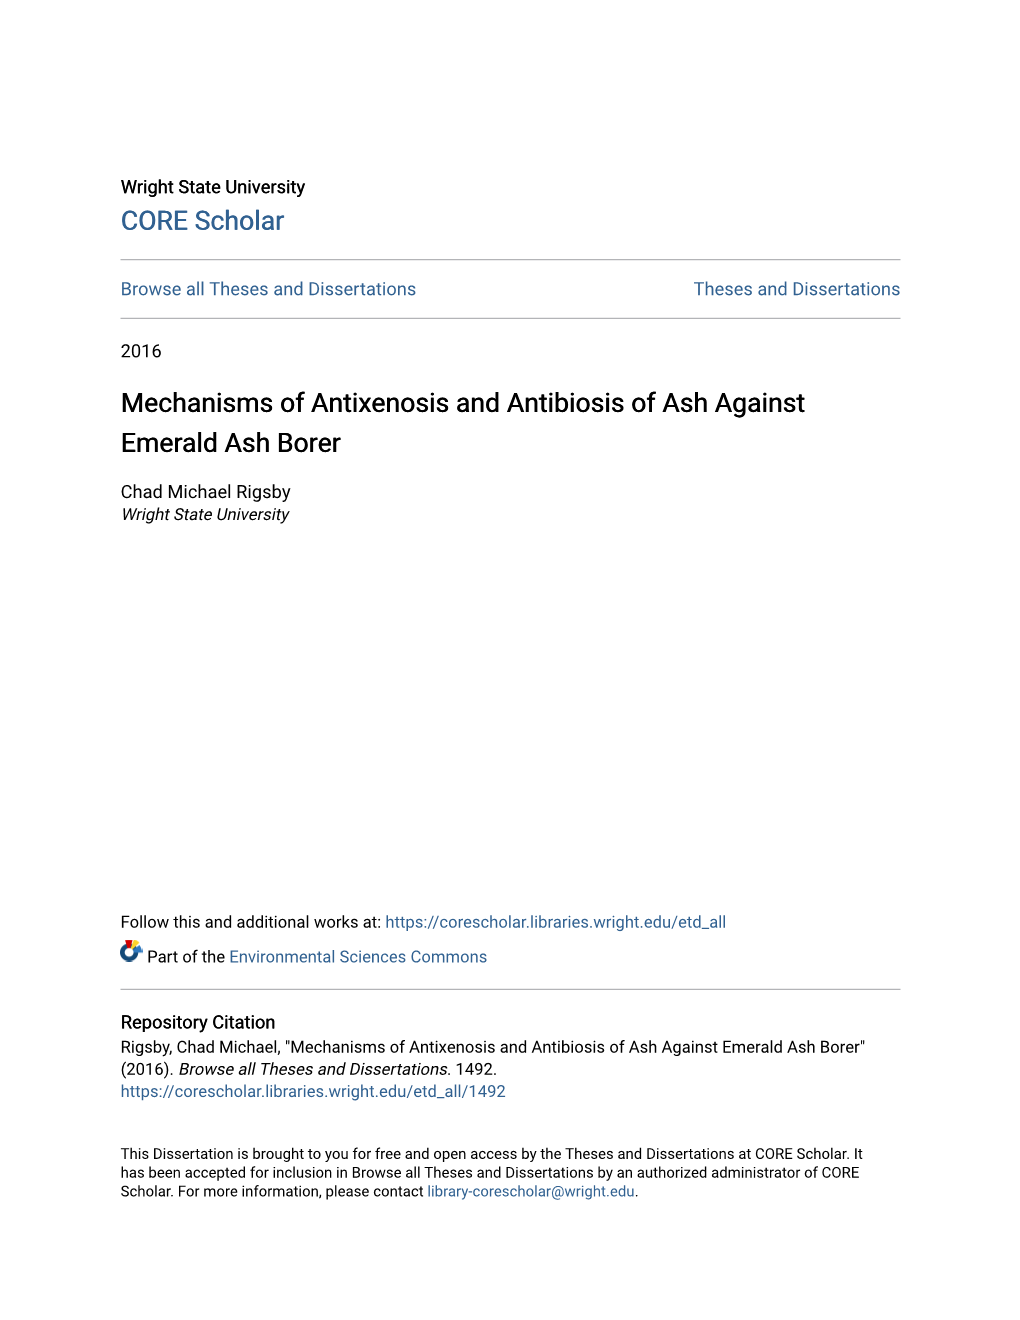 Mechanisms of Antixenosis and Antibiosis of Ash Against Emerald Ash Borer